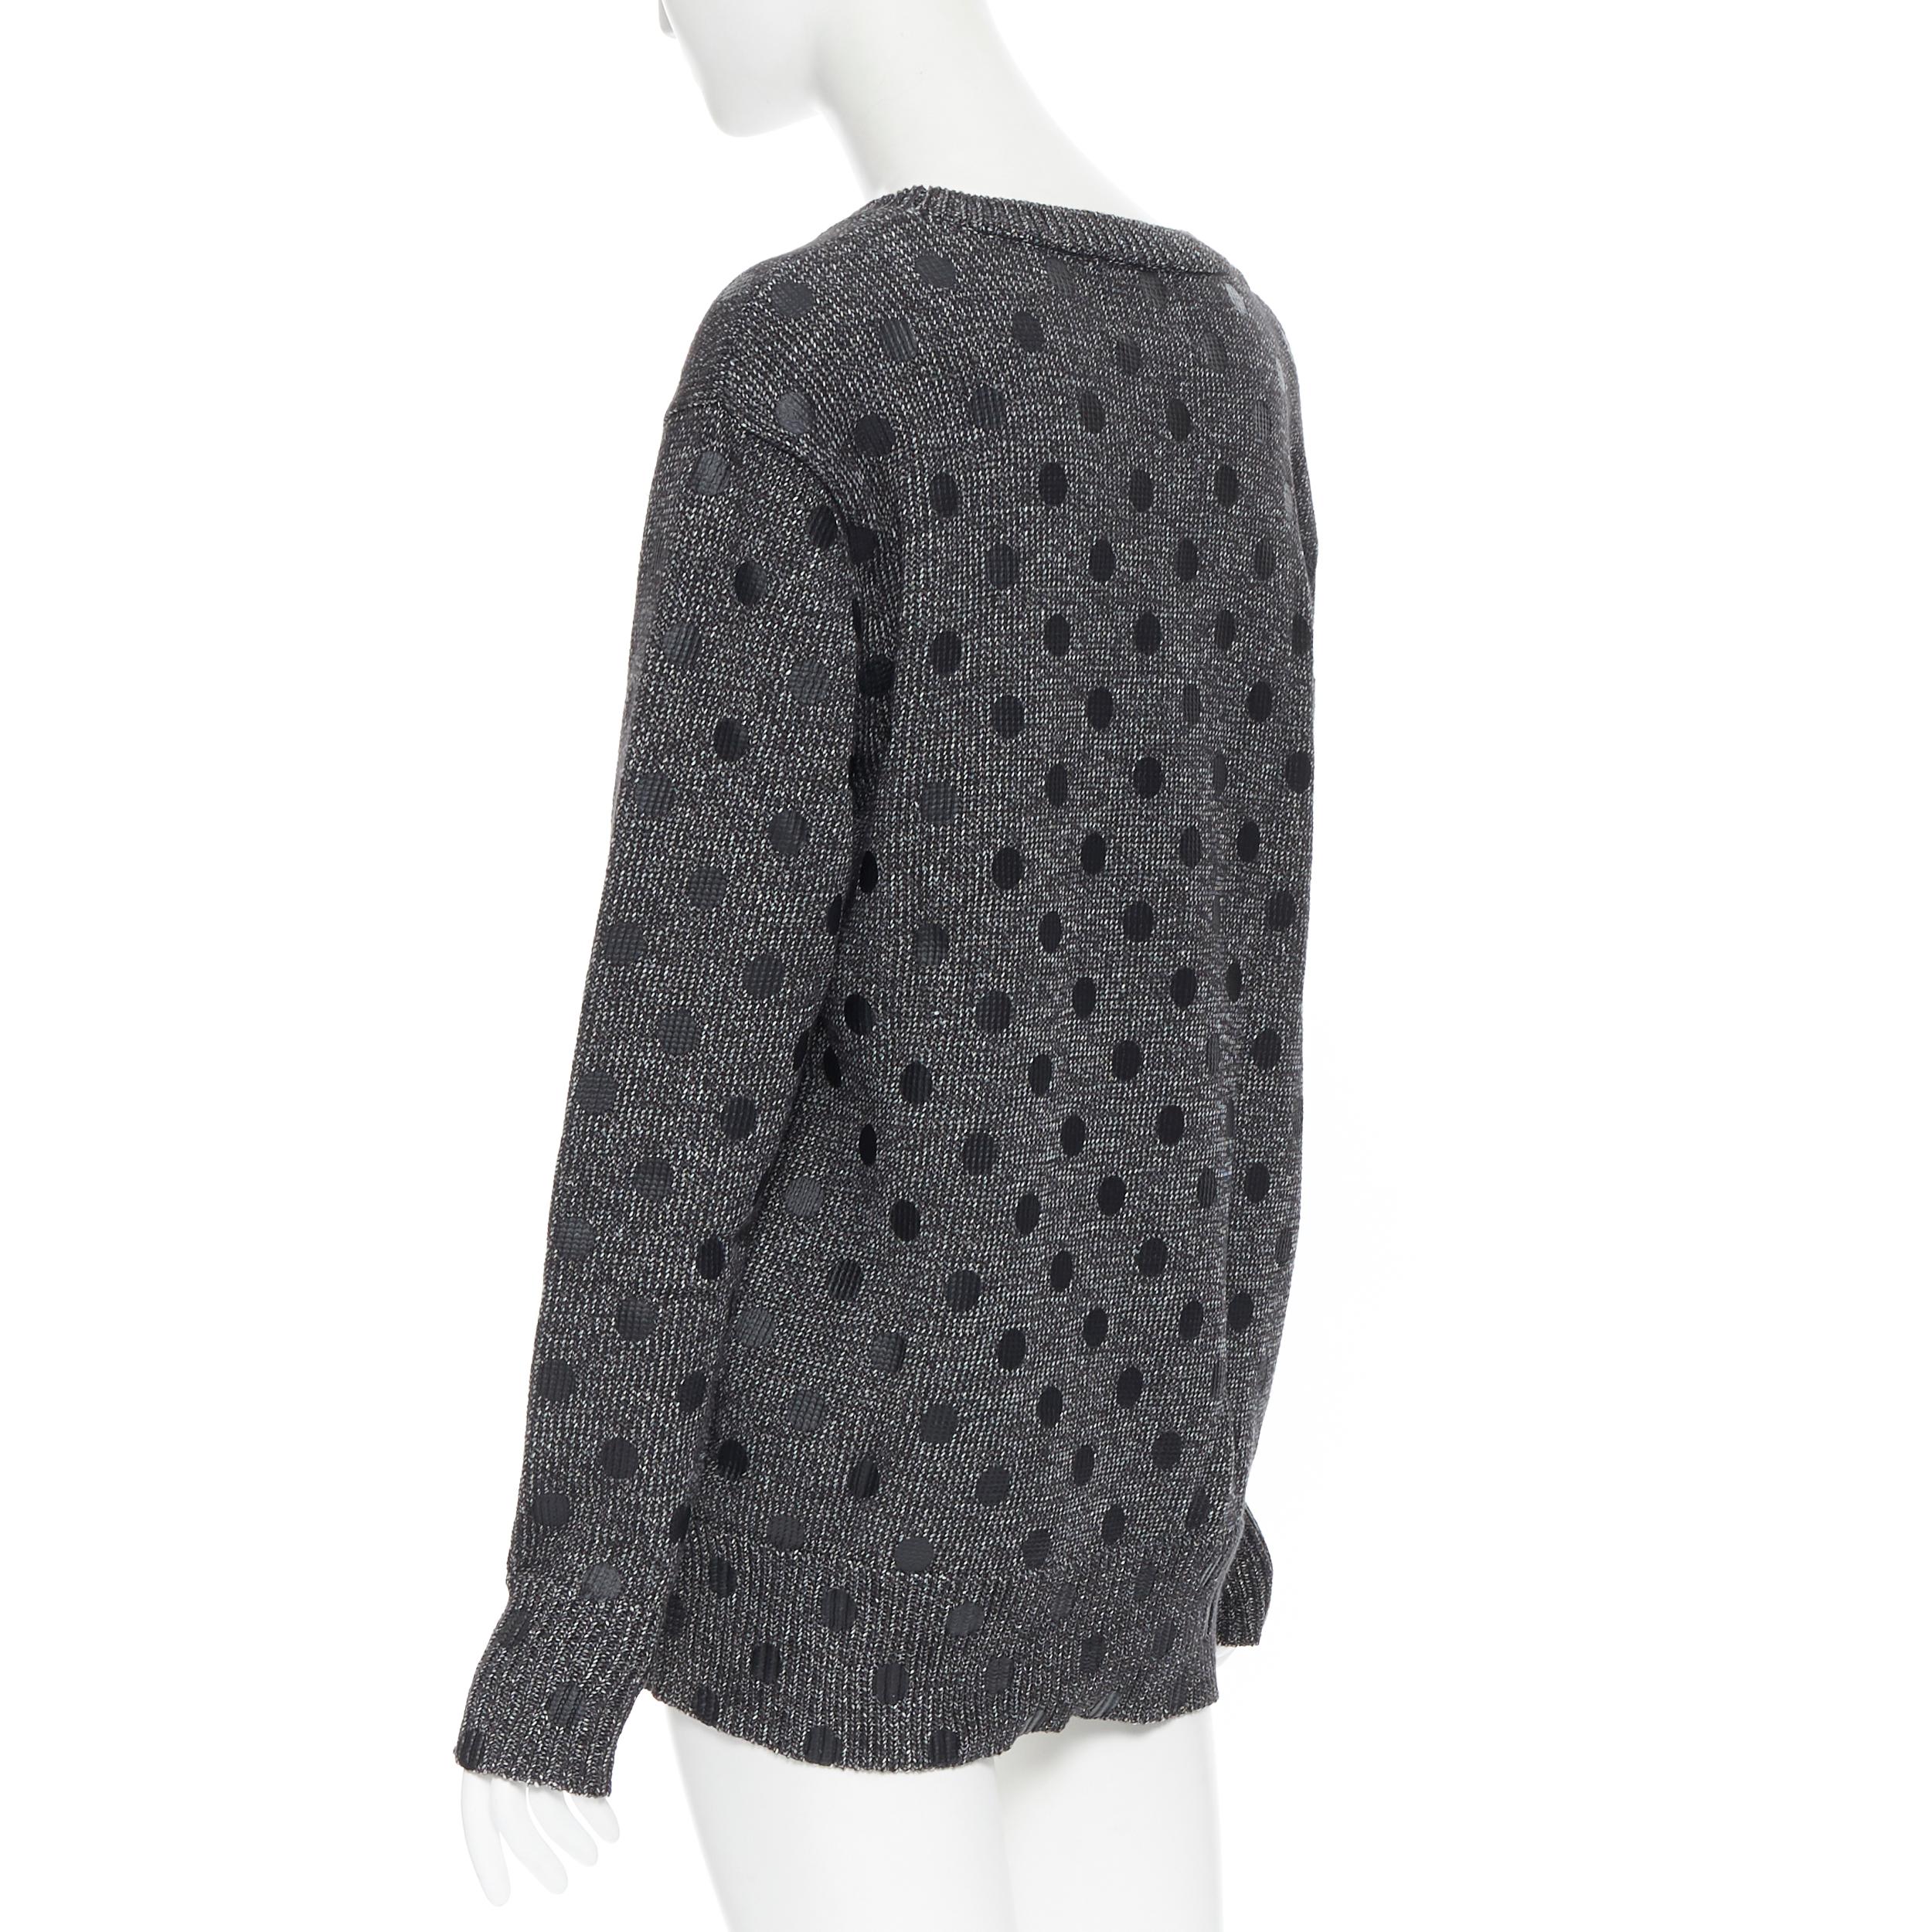 MARKUS LUPFER cotton blend knit grey polka dot printed oversized sweater L For Sale 1